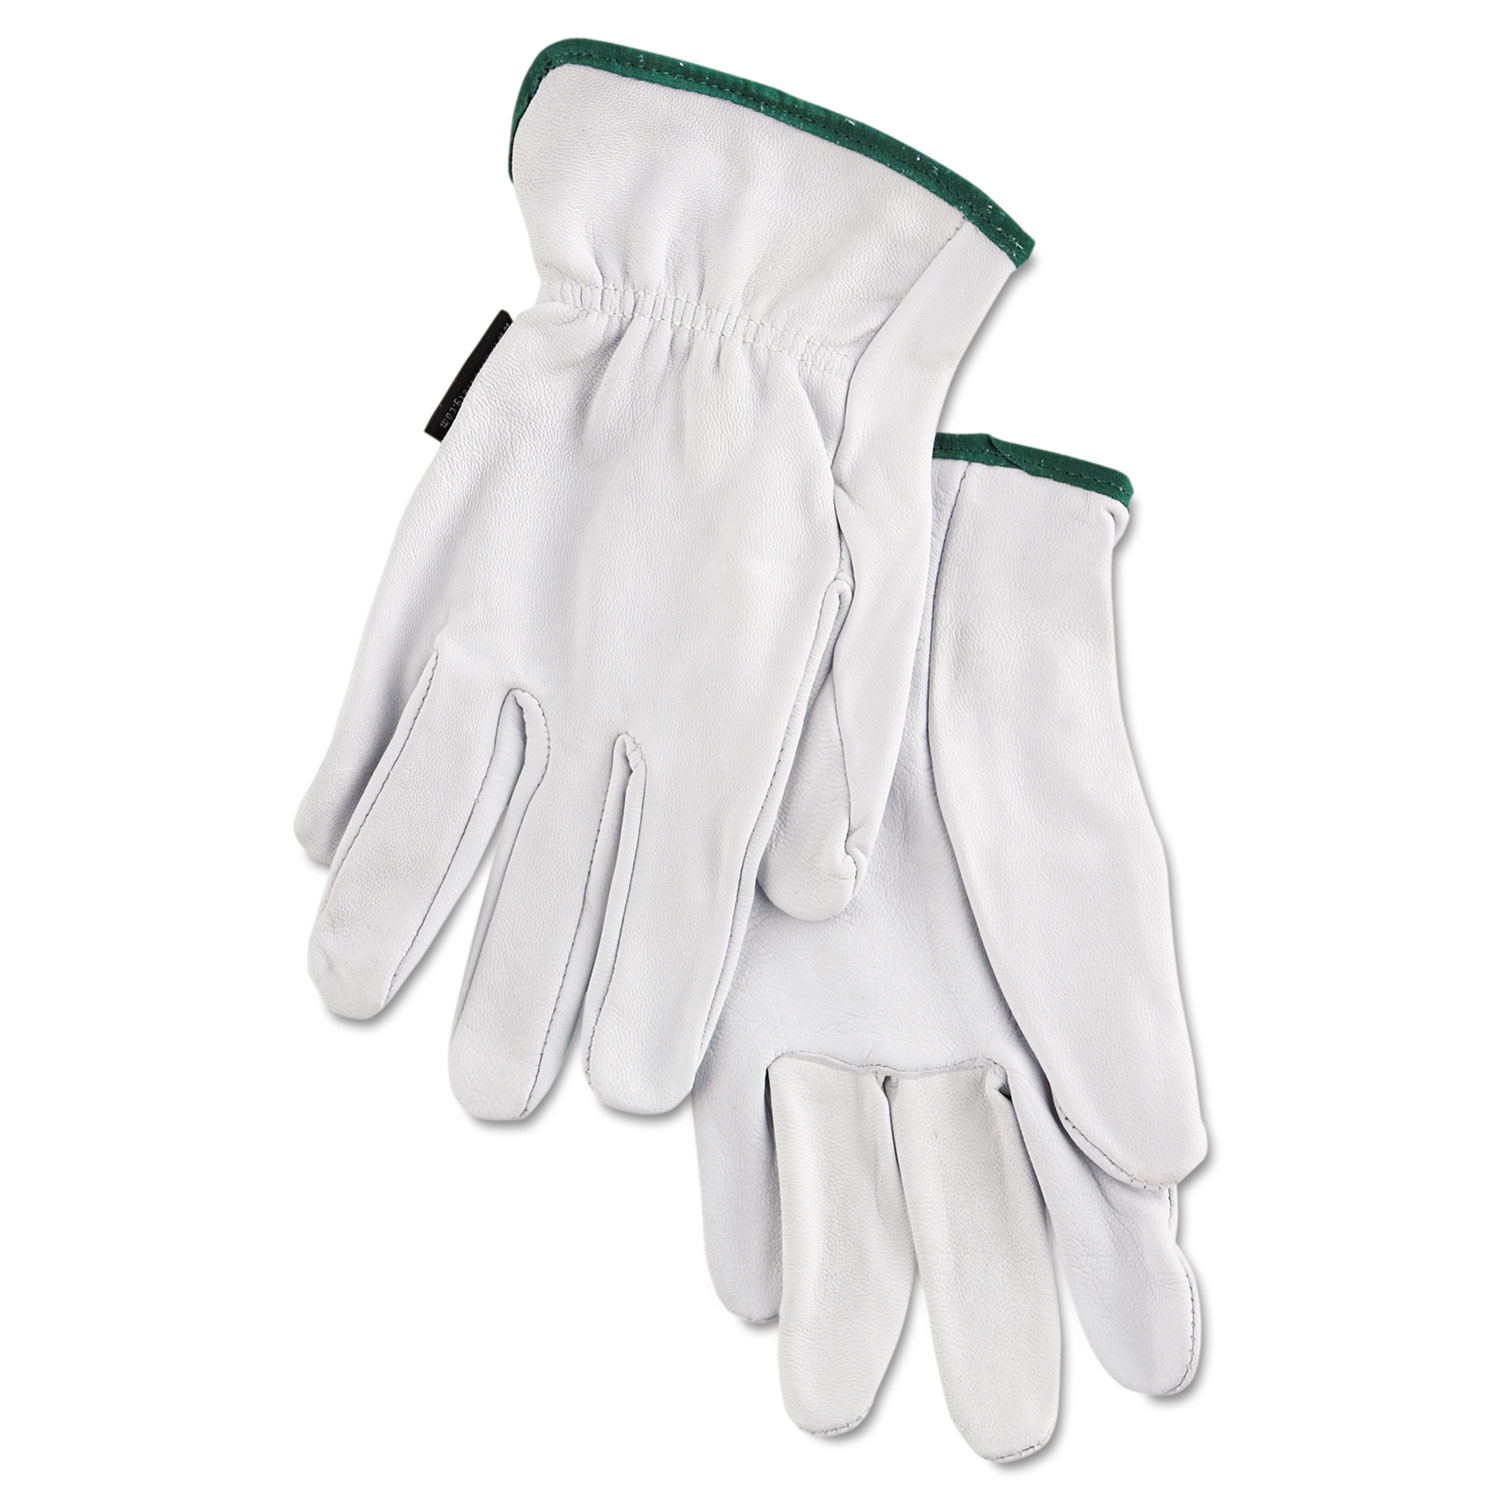  MCR Safety 3601M Grain Goatskin Driver Gloves, White, Medium, 12 Pairs (MPG3601M) 